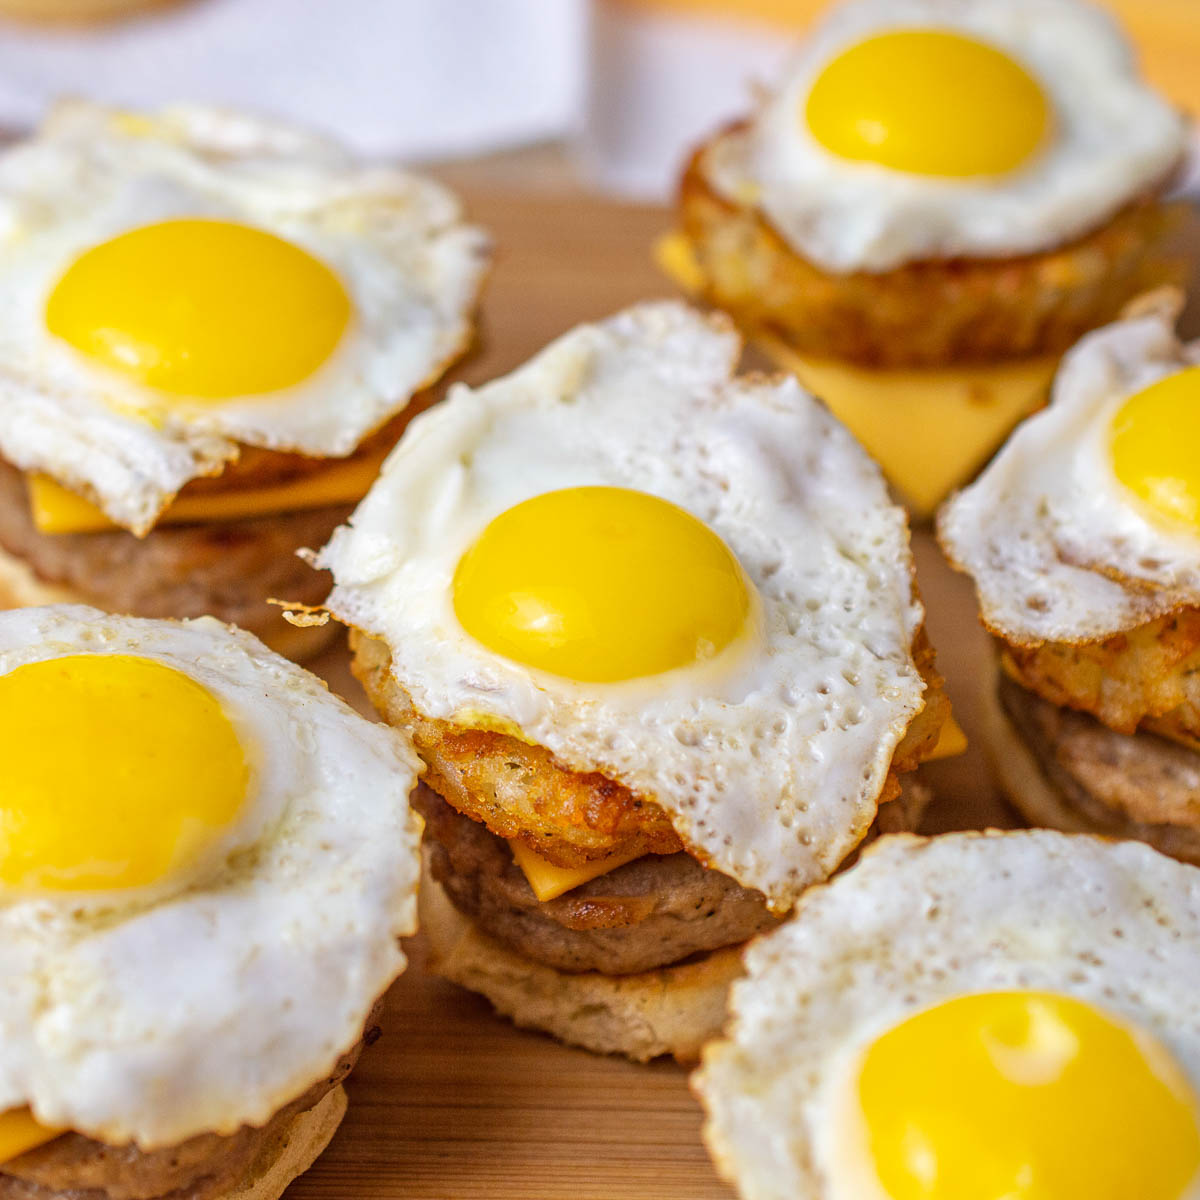 Fried quail eggs on mini breakfast sandwiches